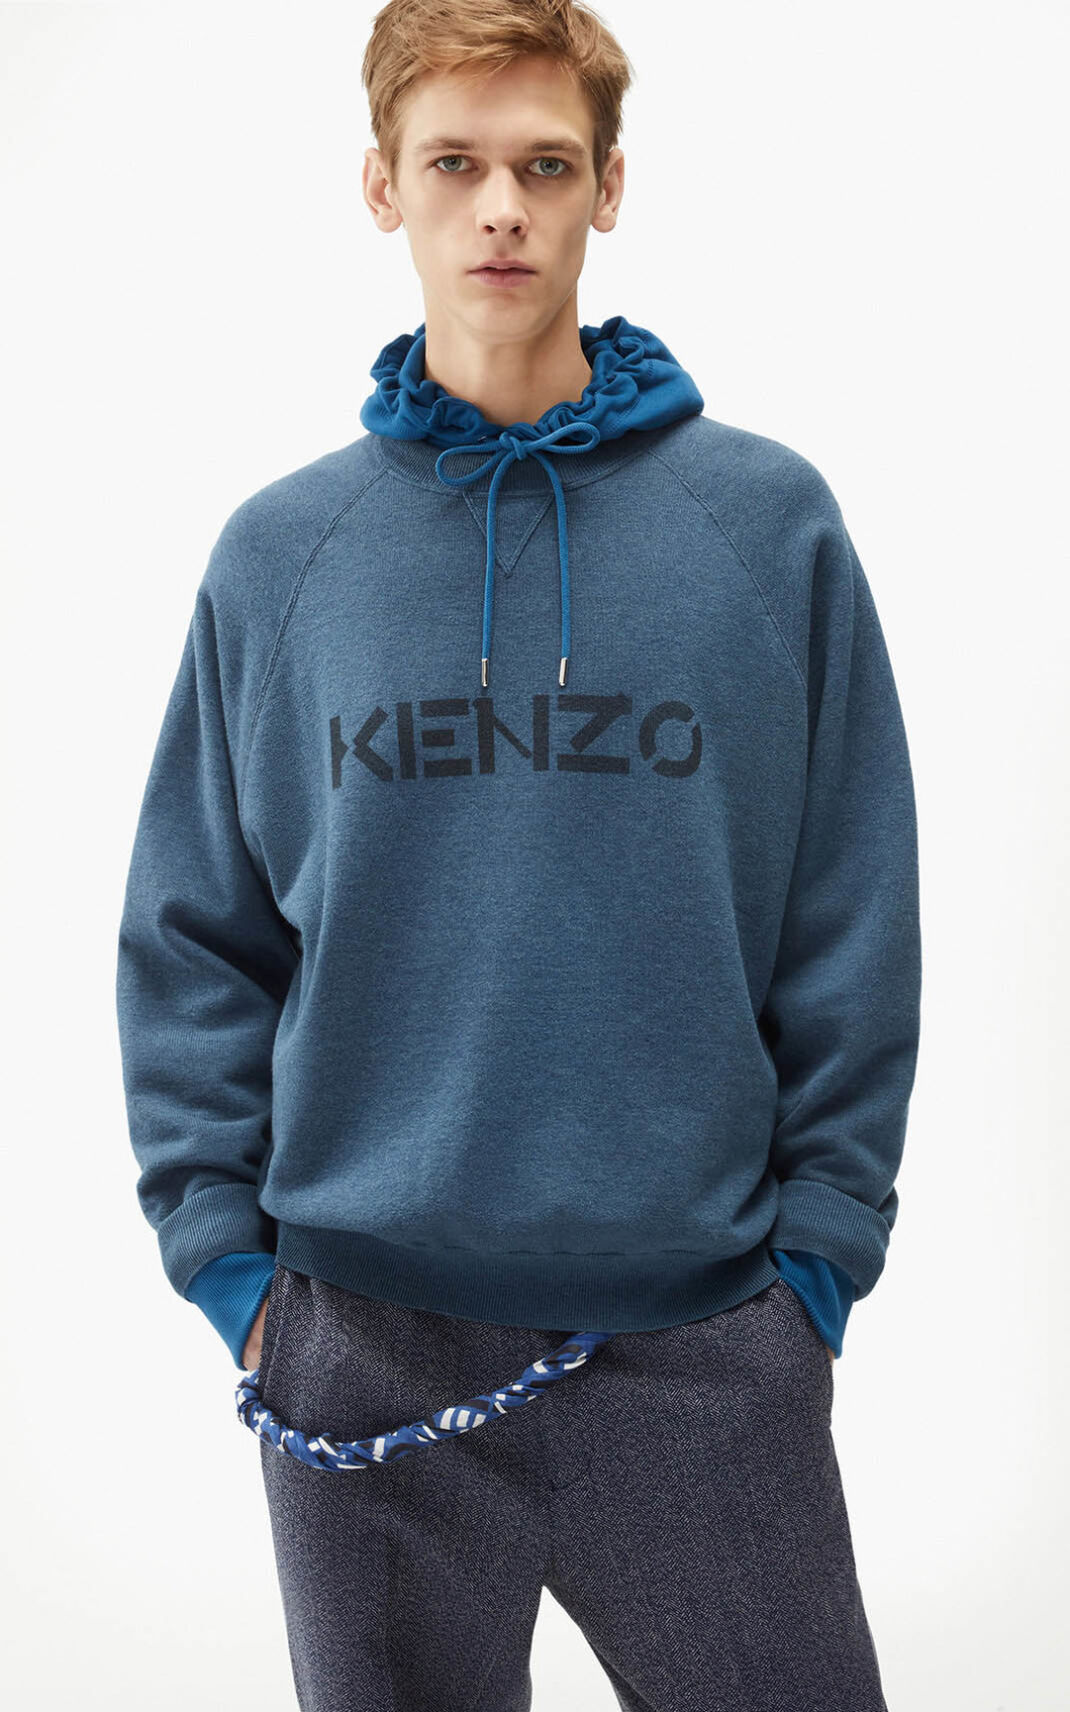 Jerseys Kenzo logo Hombre Azules - SKU.8844986